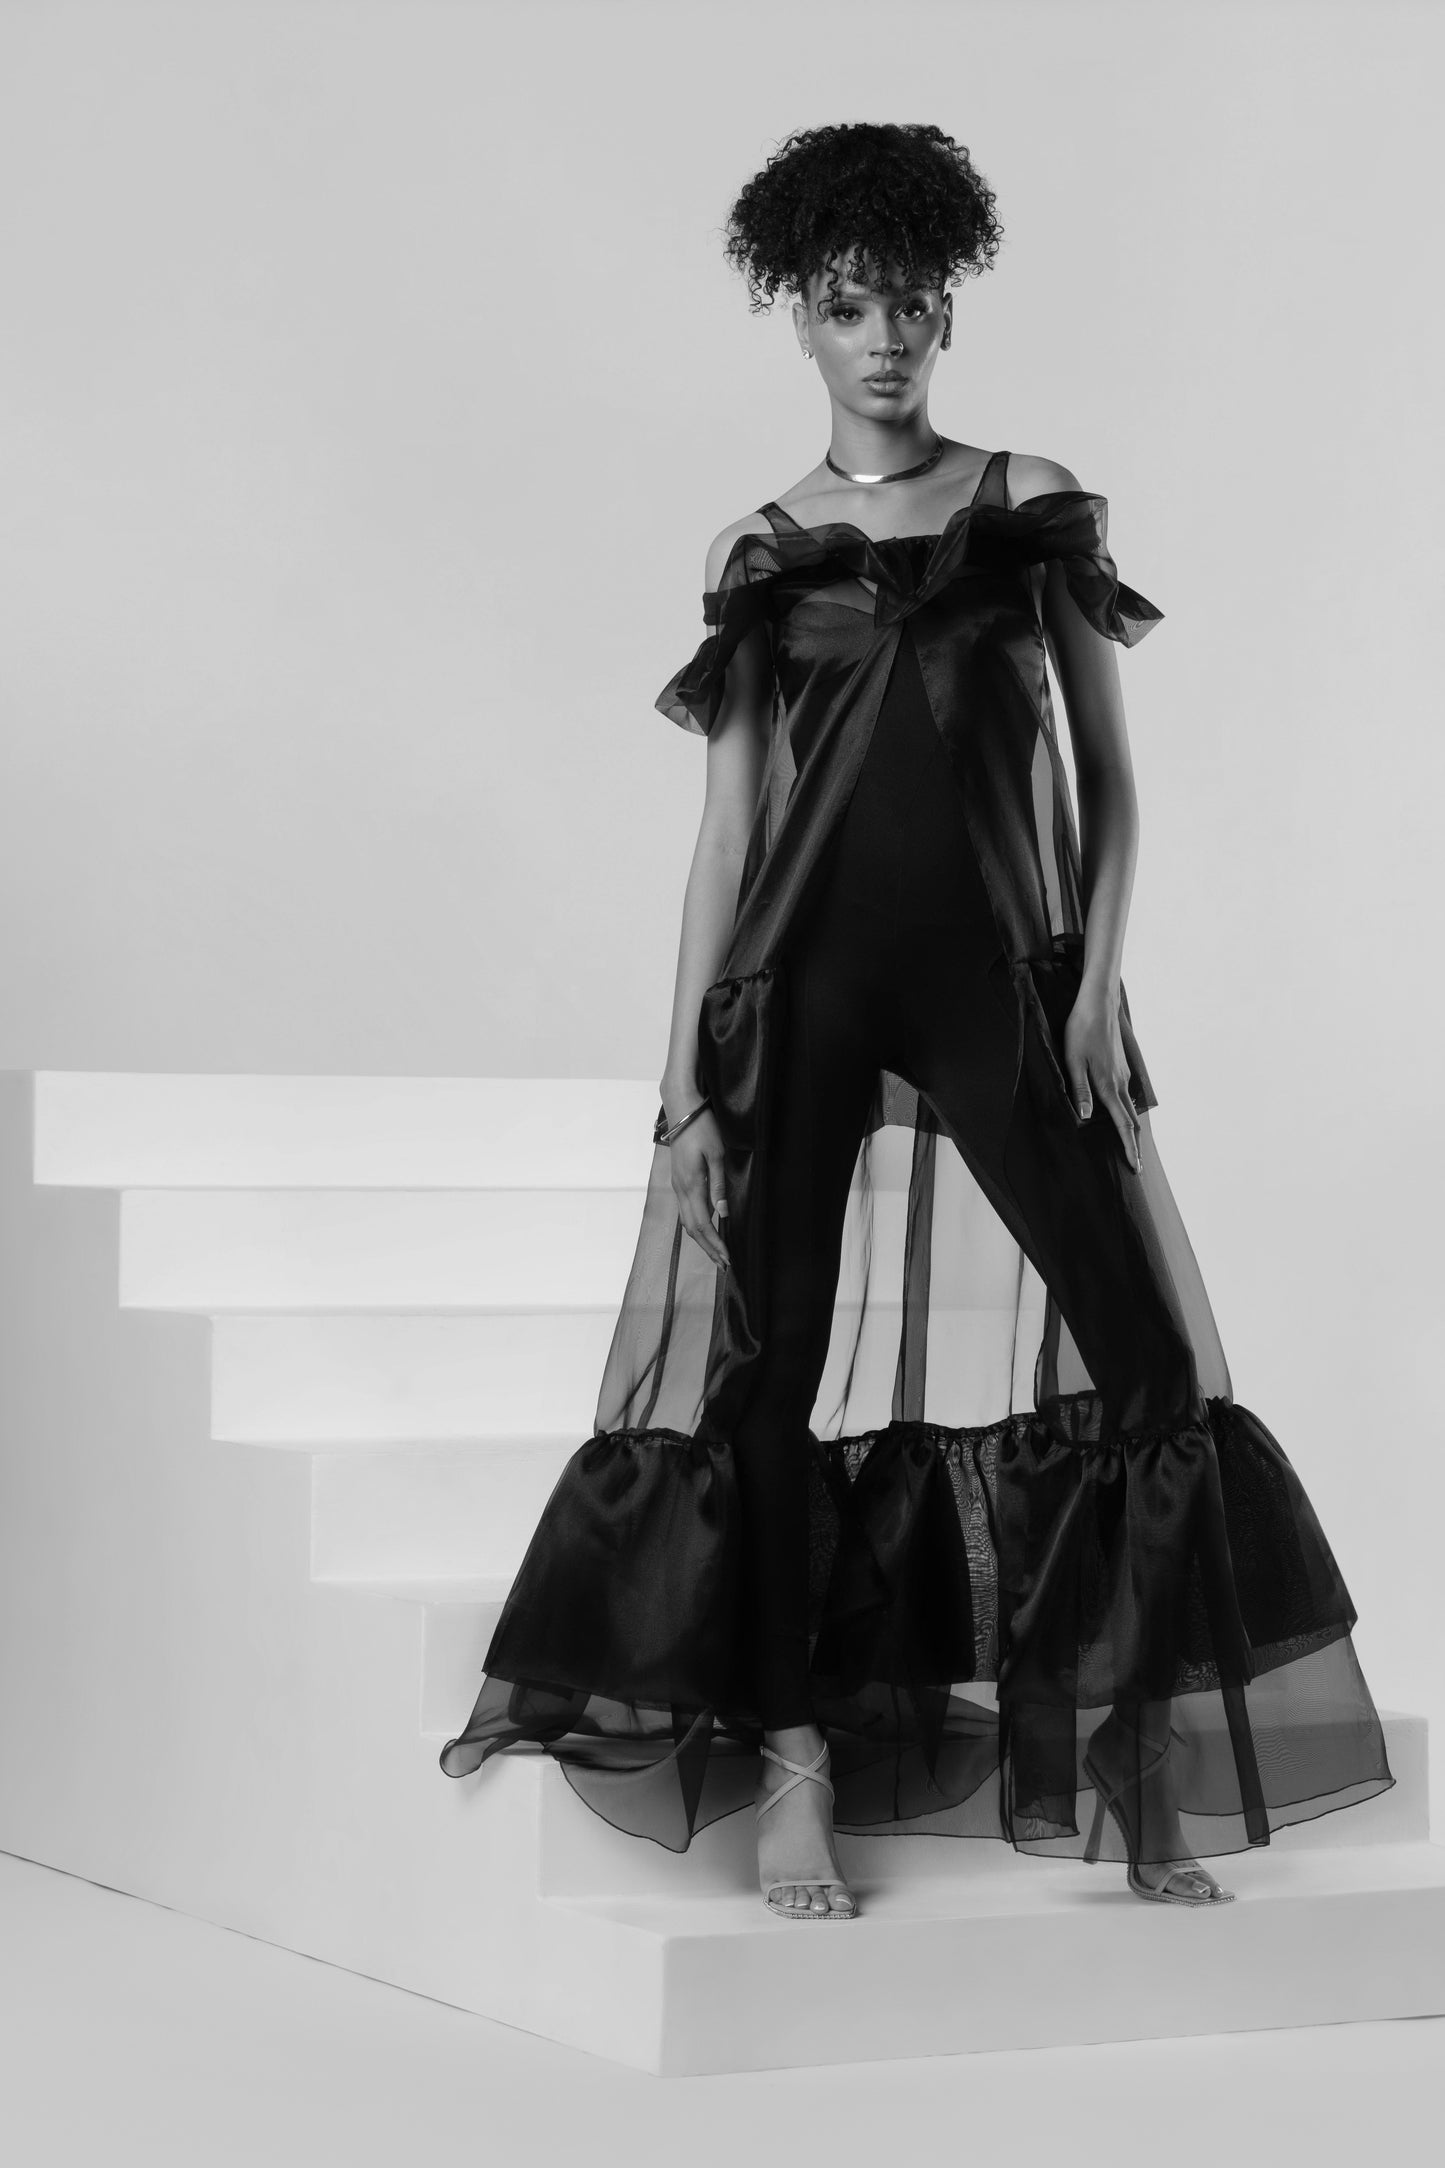 AHD LA Black Leotard Body Suit & Black Organza Dress by Anthony Hamdan Djendeli